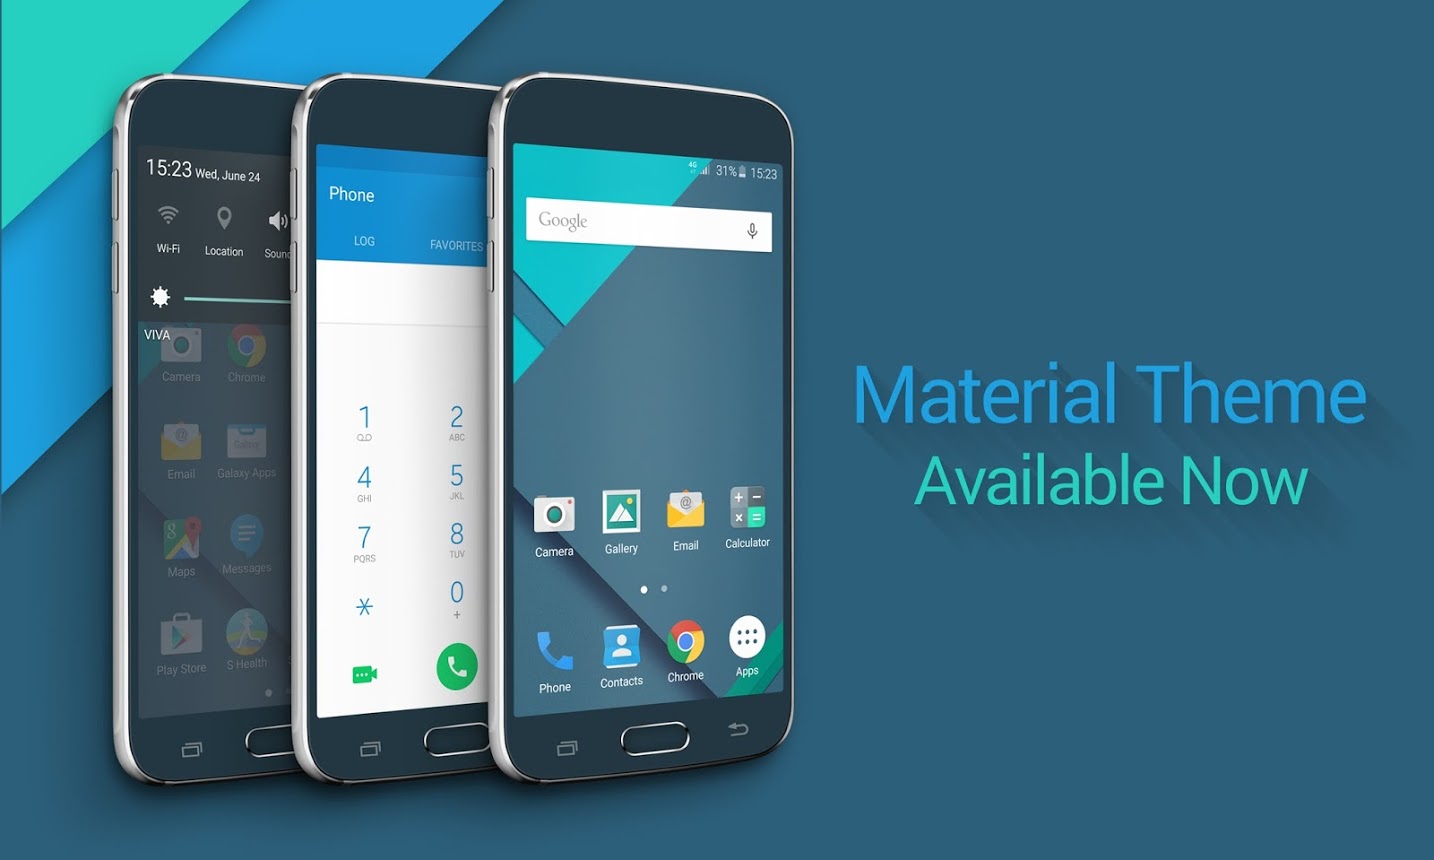 Samsung Galaxy s6 - Material Theme